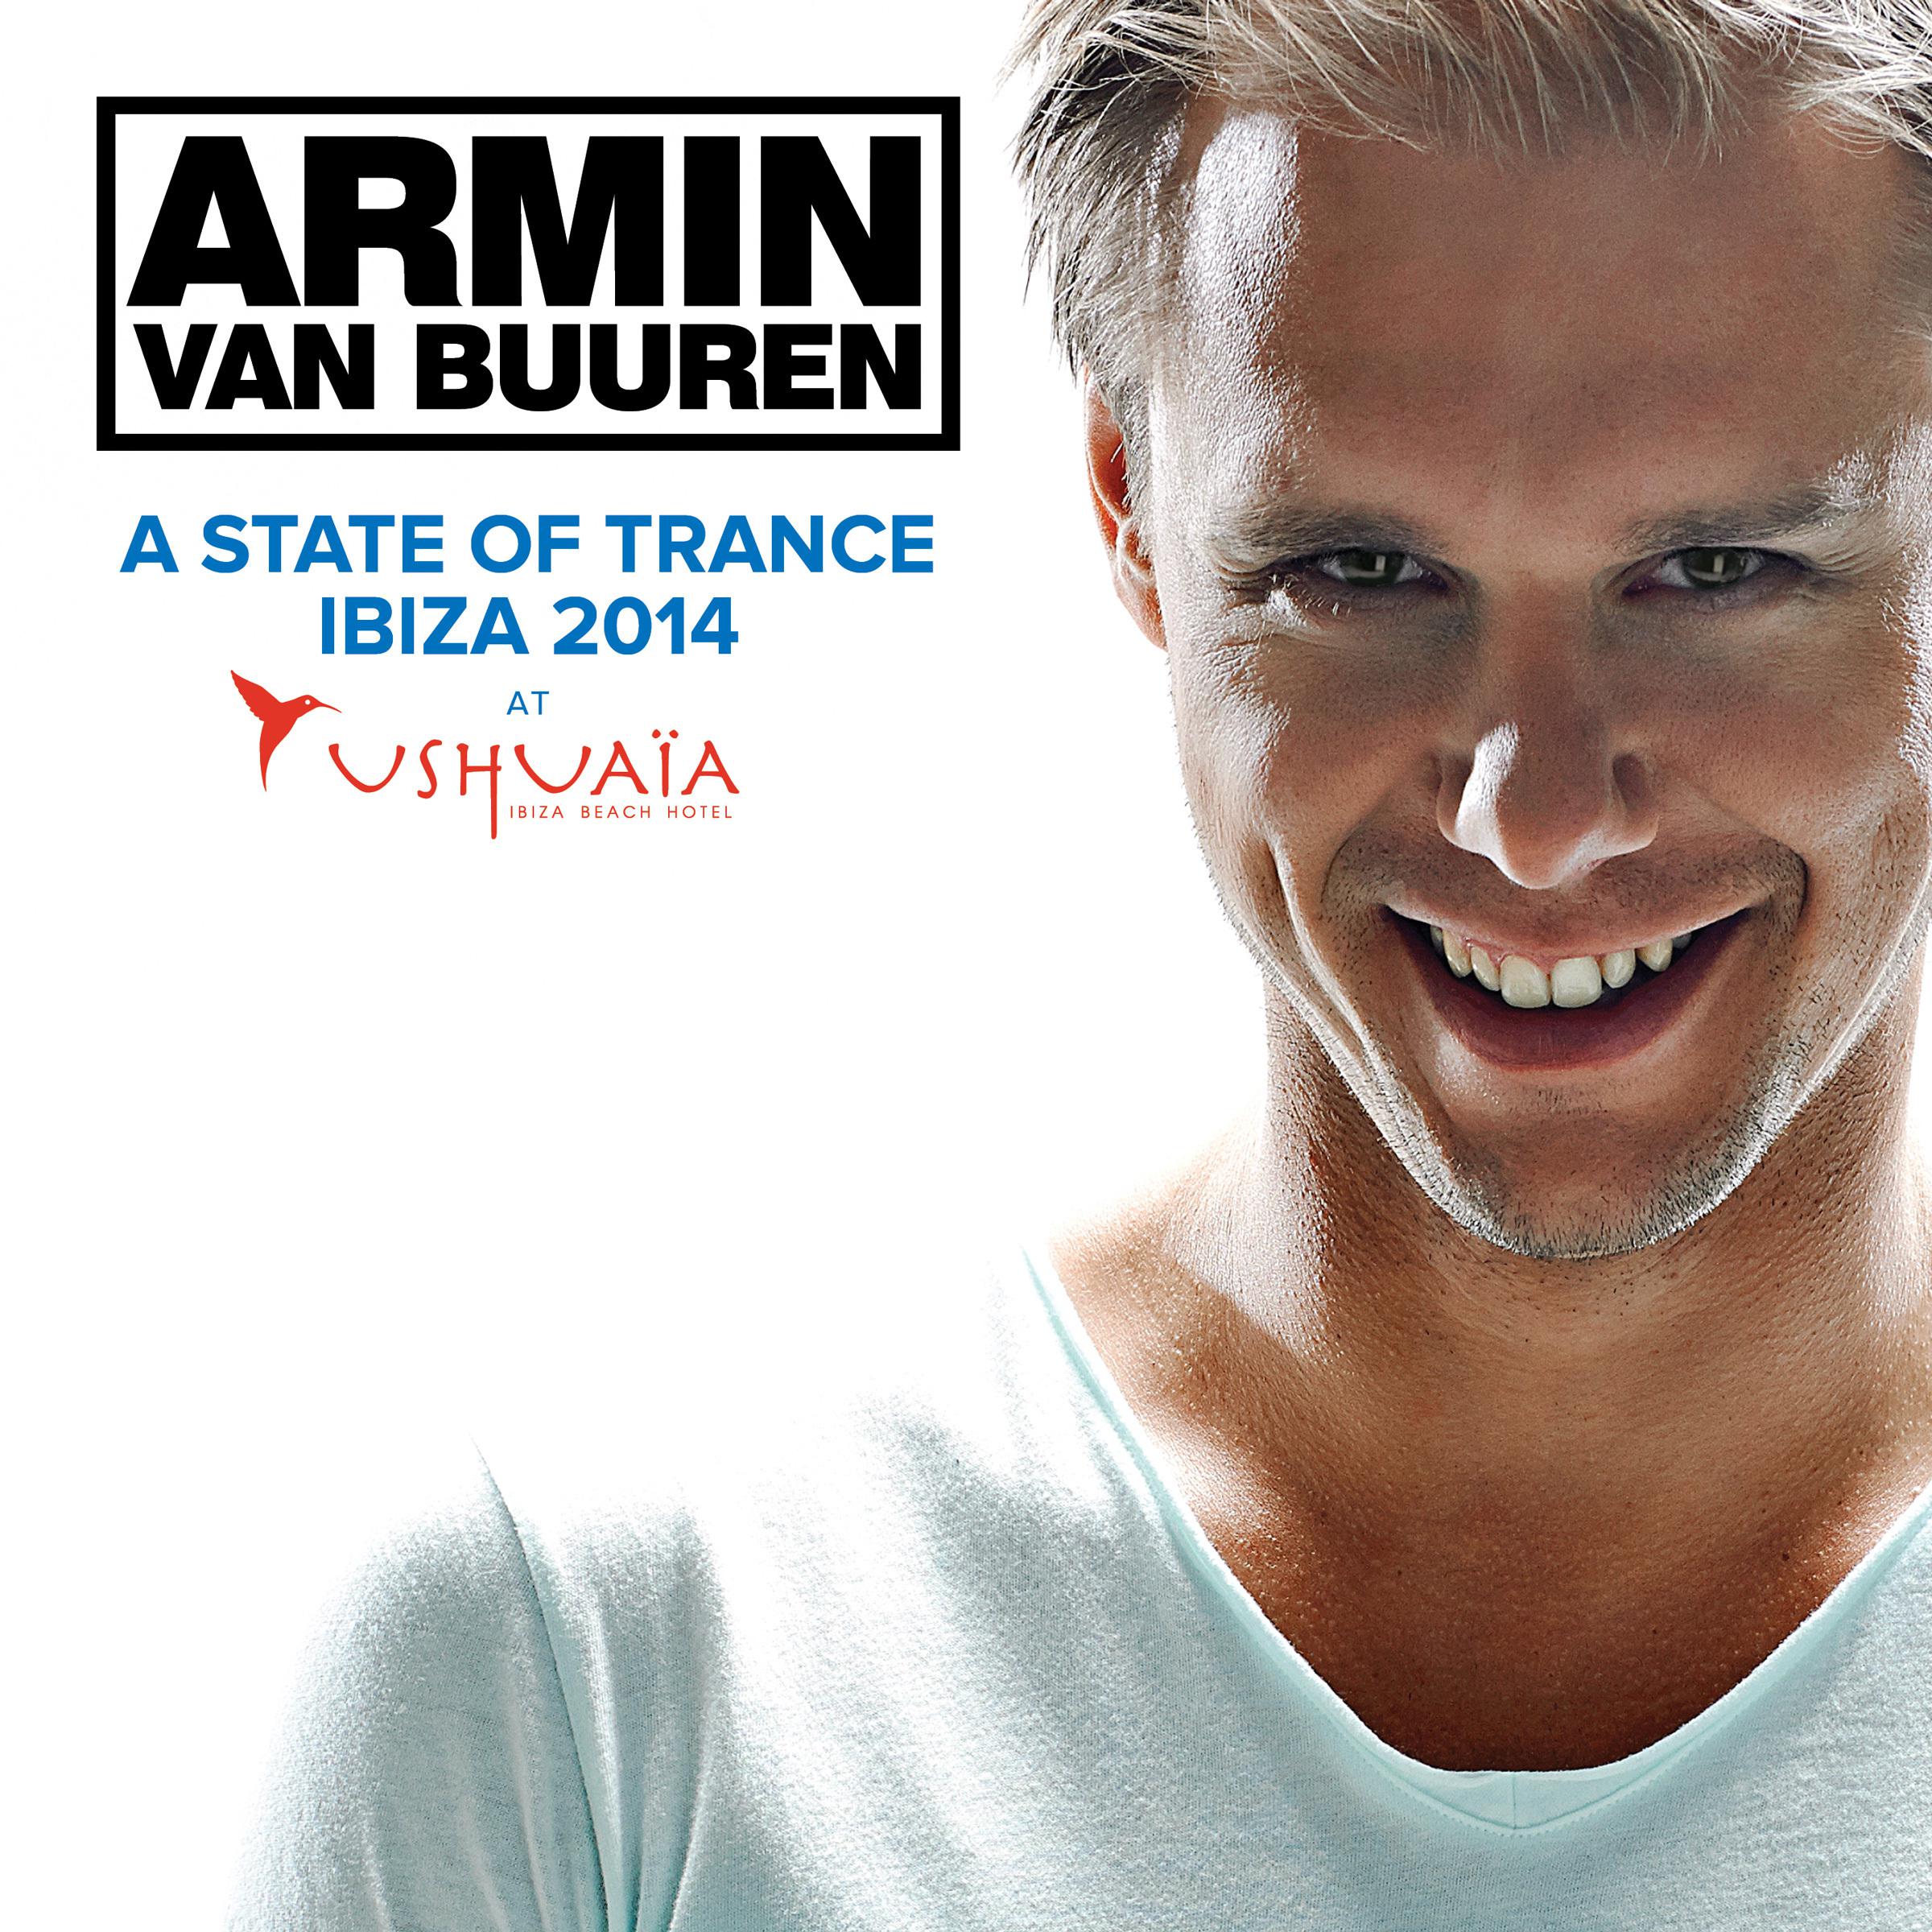 A State Of Trance at Ushua a, Ibiza 2014 Mixed by Armin van Buuren